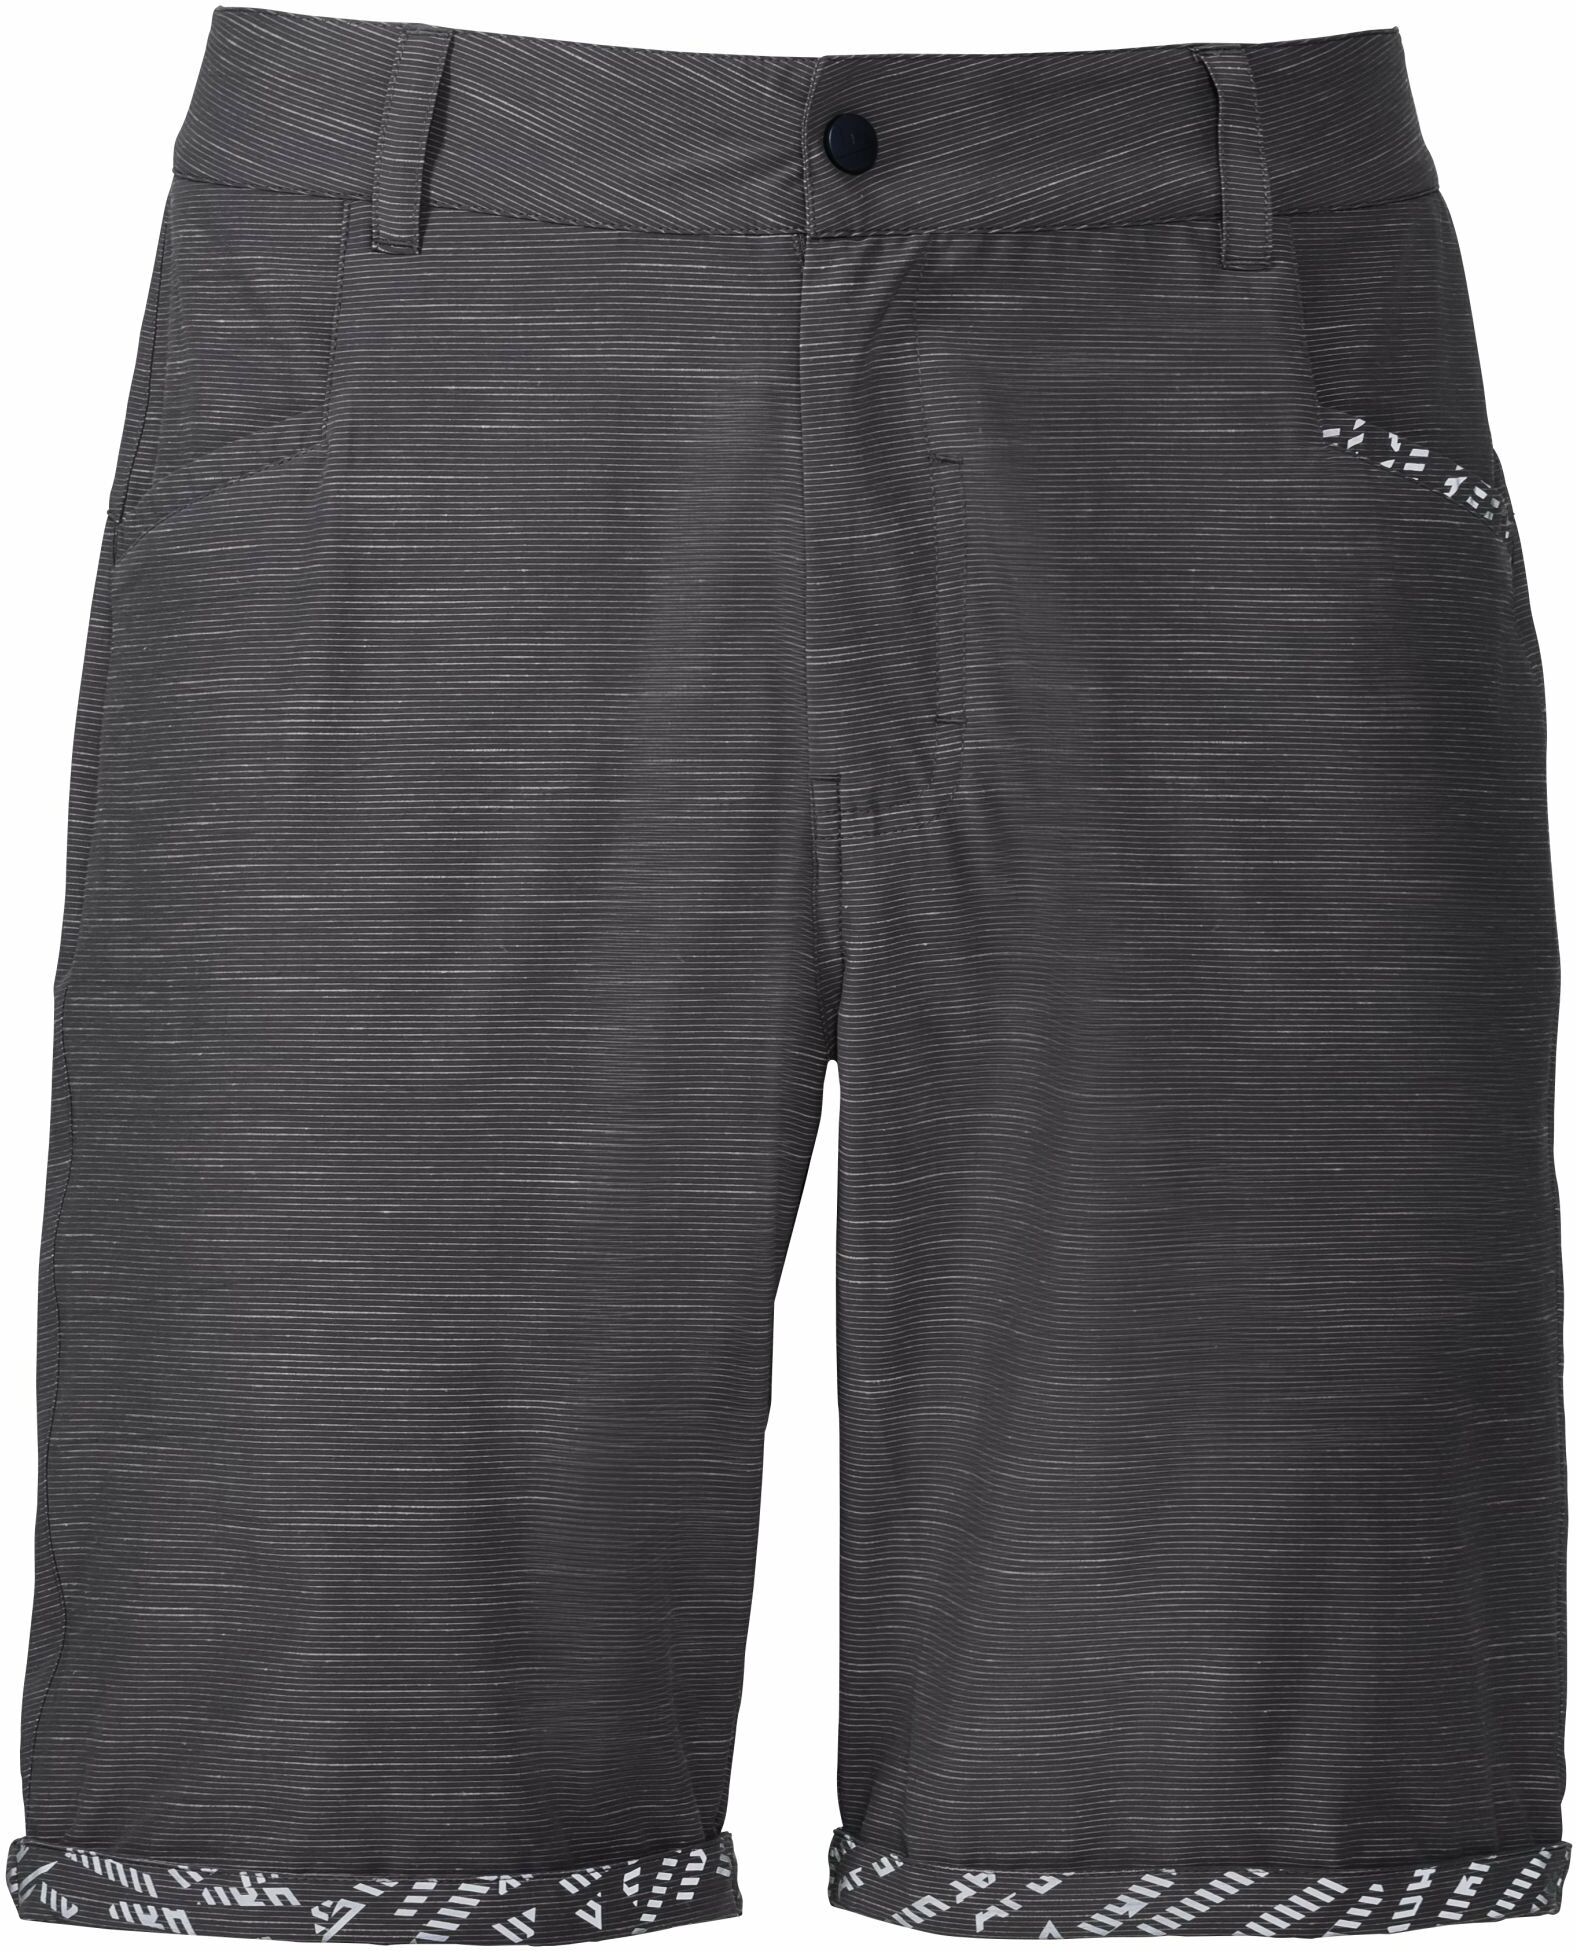 Bekleidung/Hosen: Apura  Herren Shorts Chino XL 